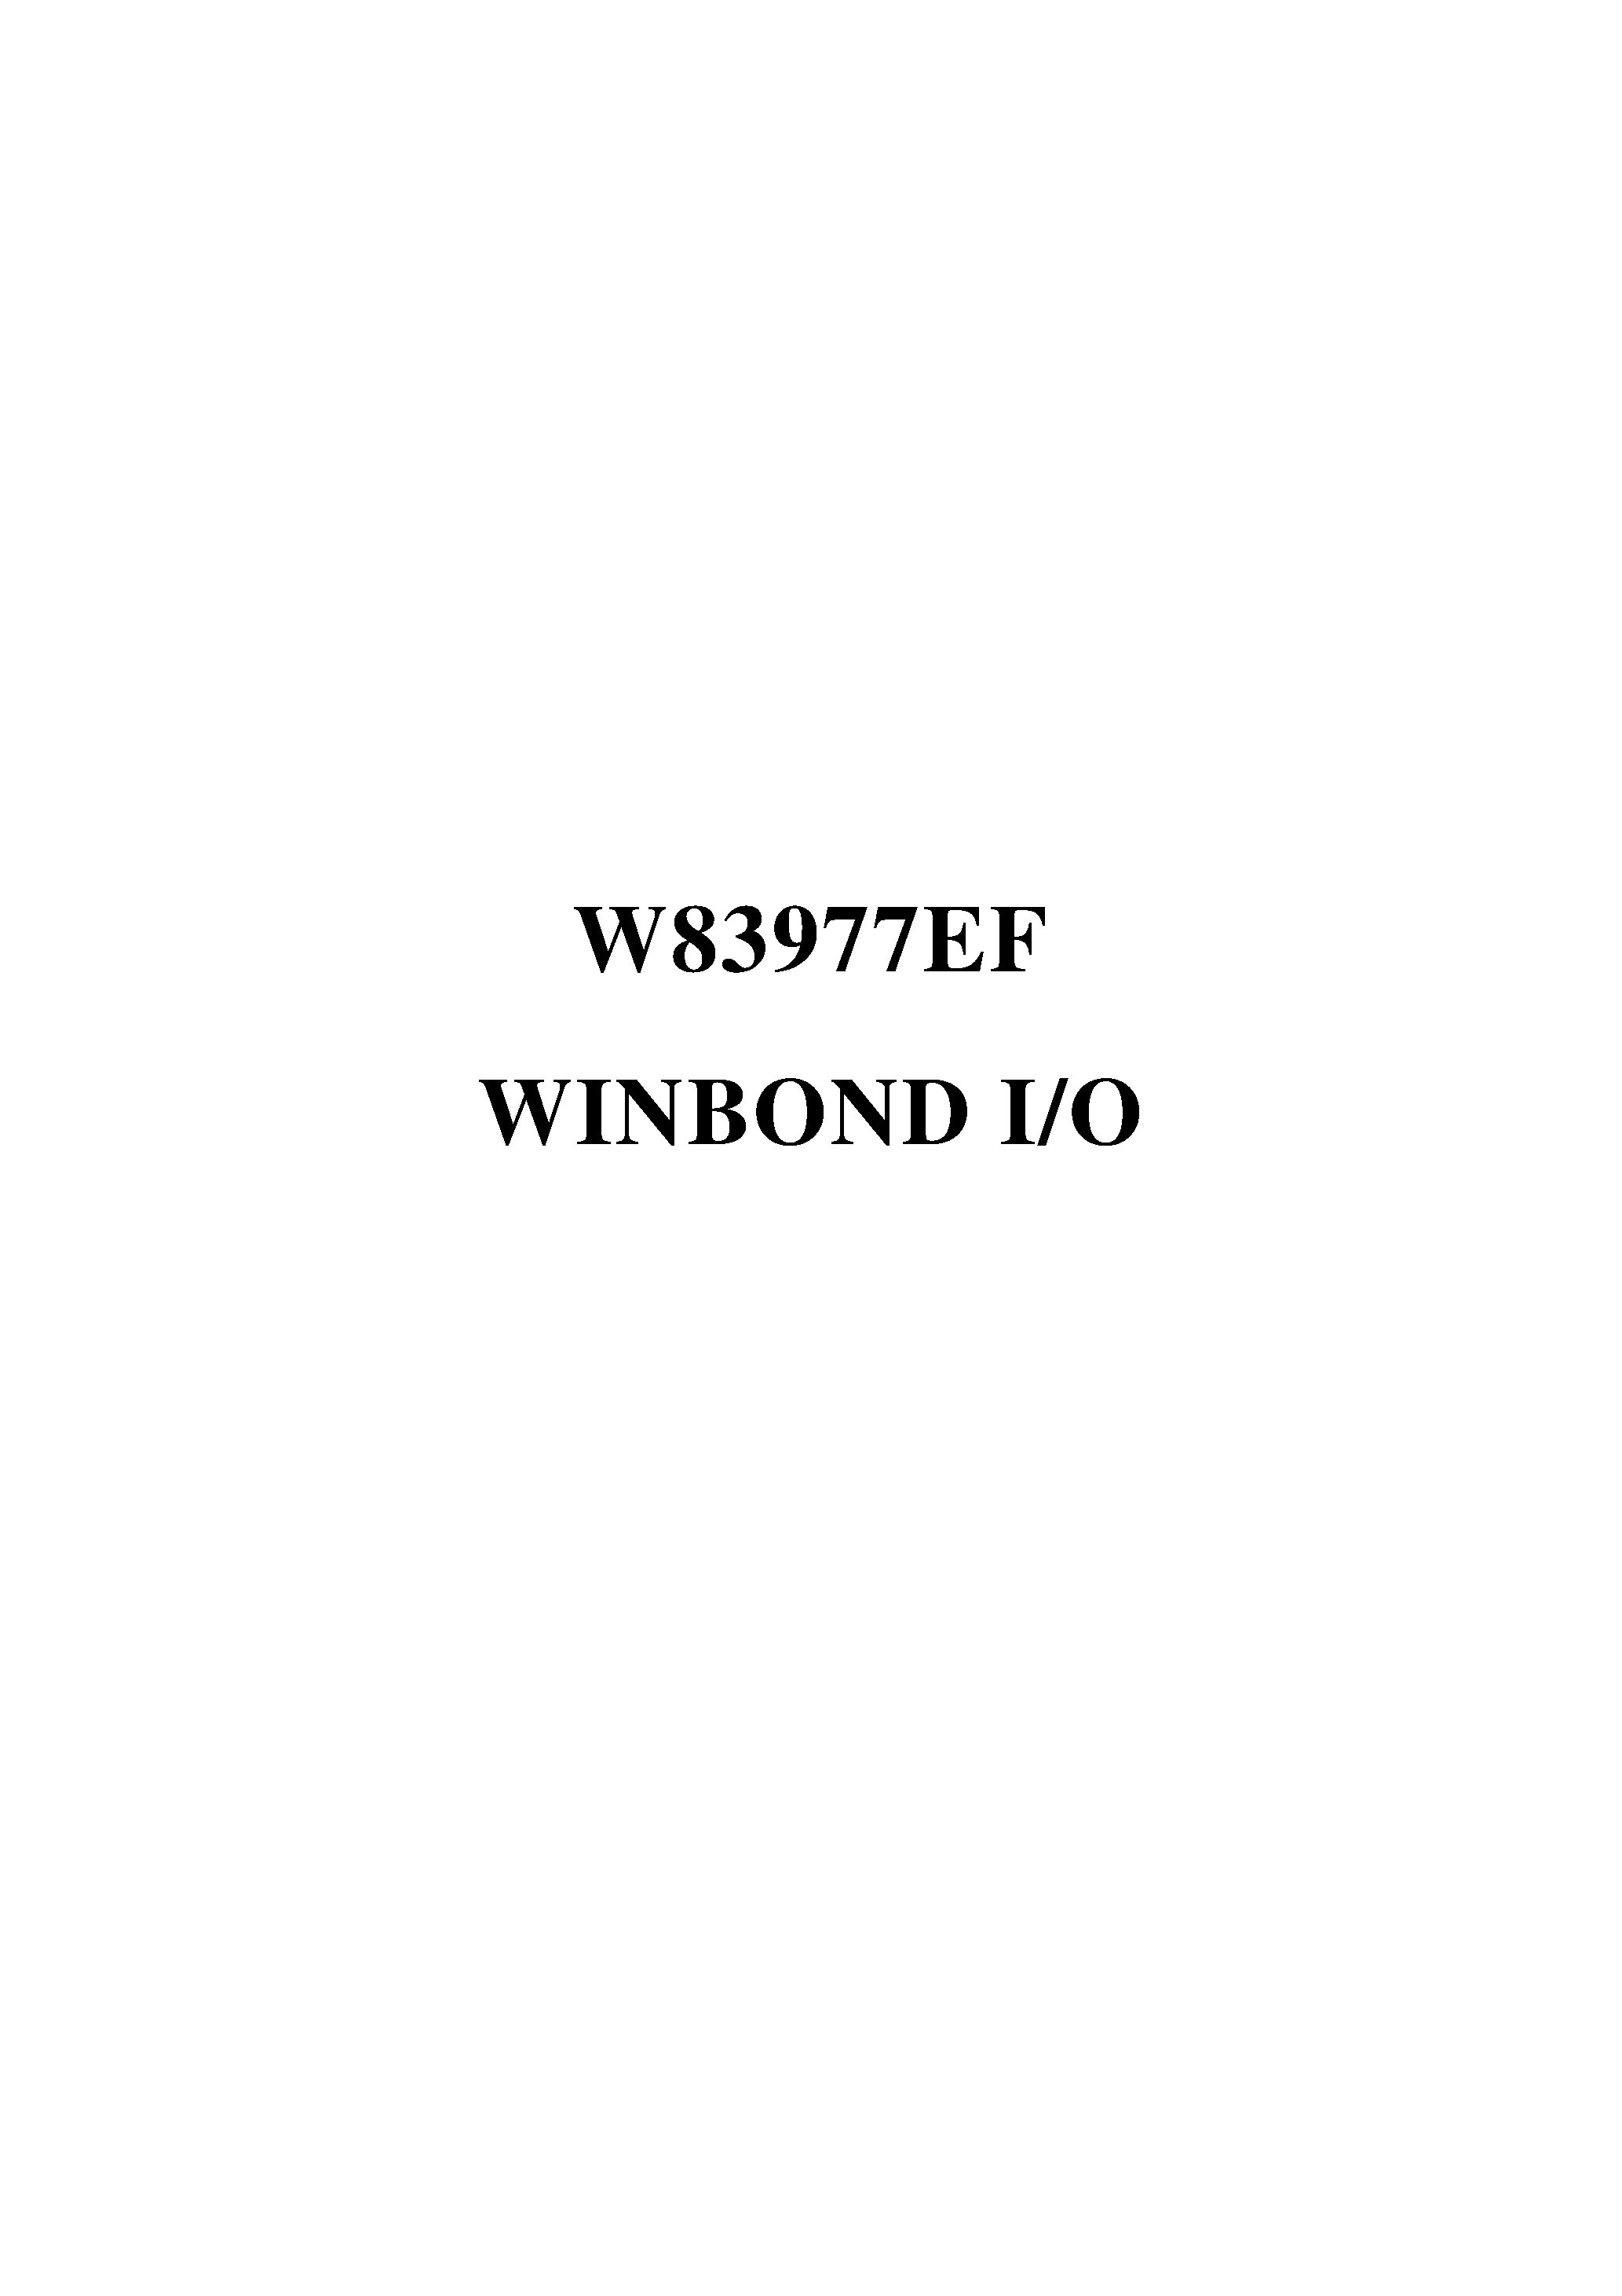 Datasheet W83977EF-AW - WINBOND I/O page 1